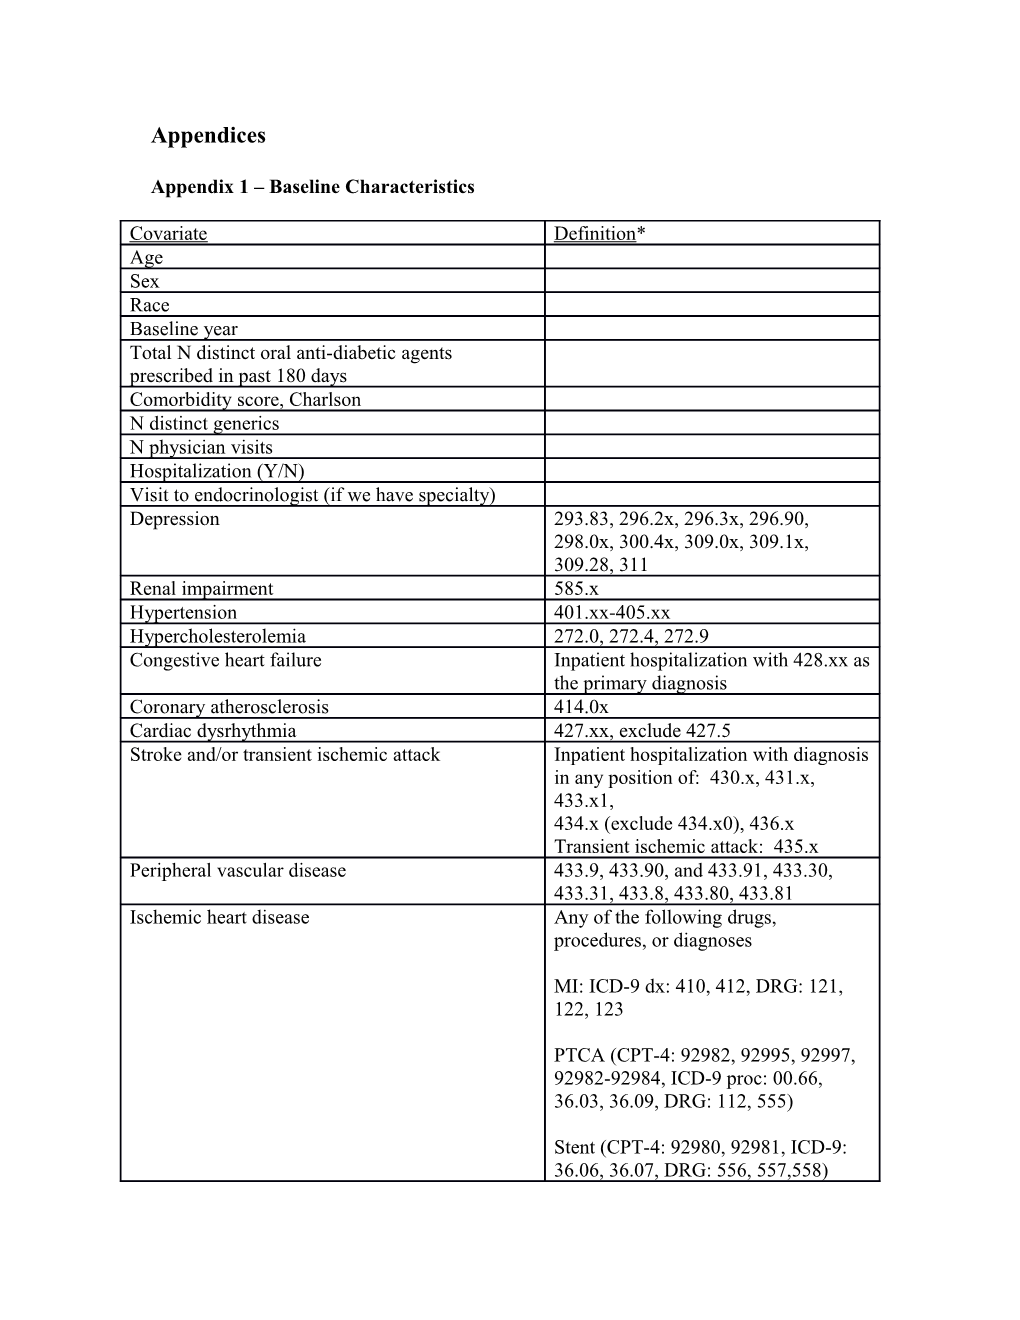 Appendix 1 Baseline Characteristics